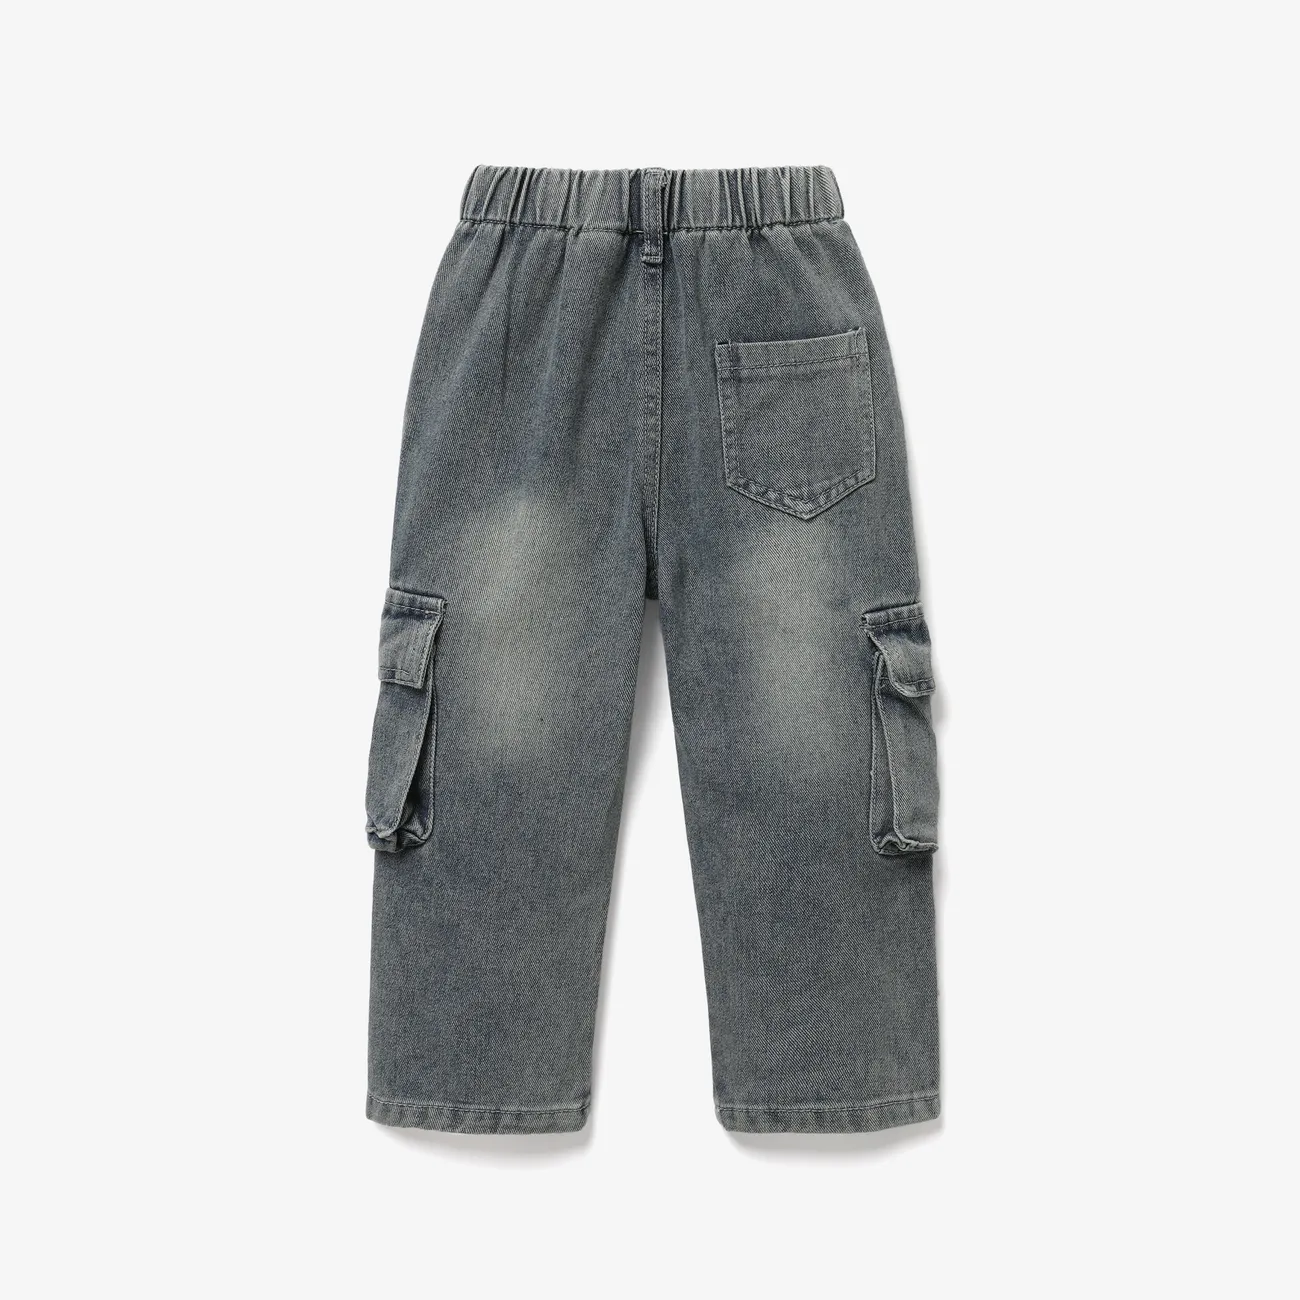 Niño pequeño / niño niña / niño ropa de trabajo vintage jeans con bolsillo de mezclilla amarillo fangoso big image 1